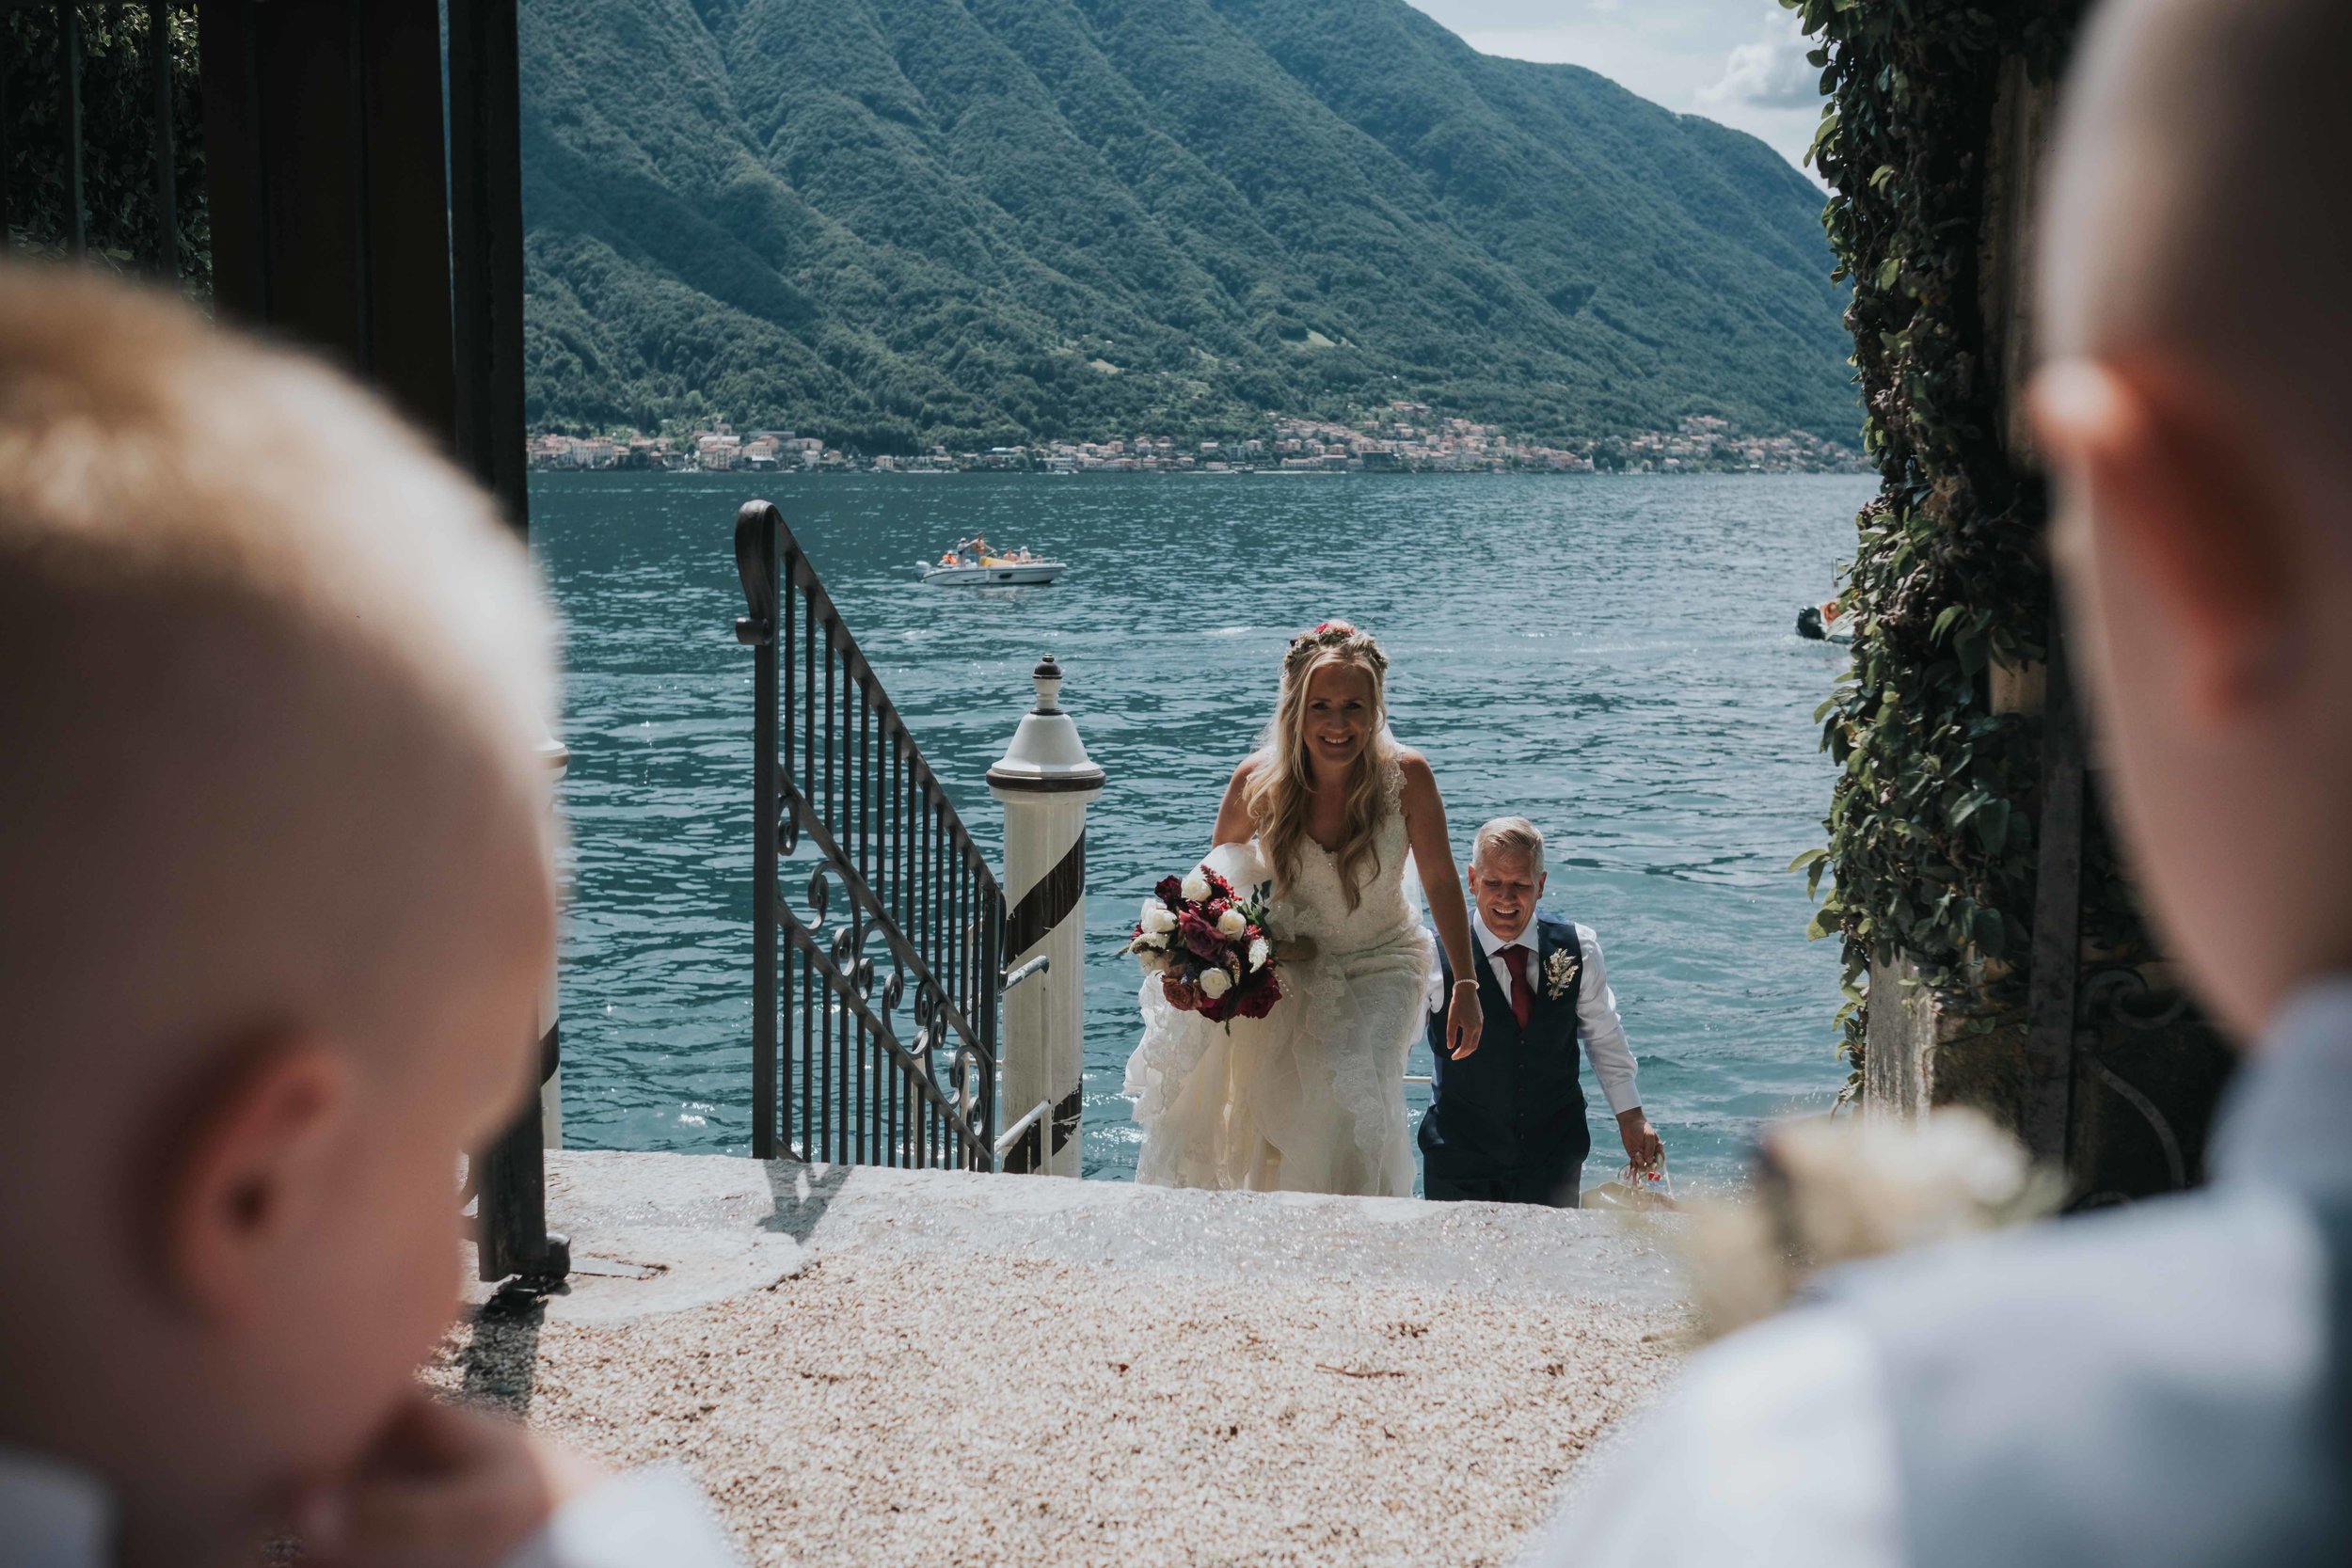 Laco Como Italy destination wedding photographer cheshire north west england documentry photography (43 of 117).jpg